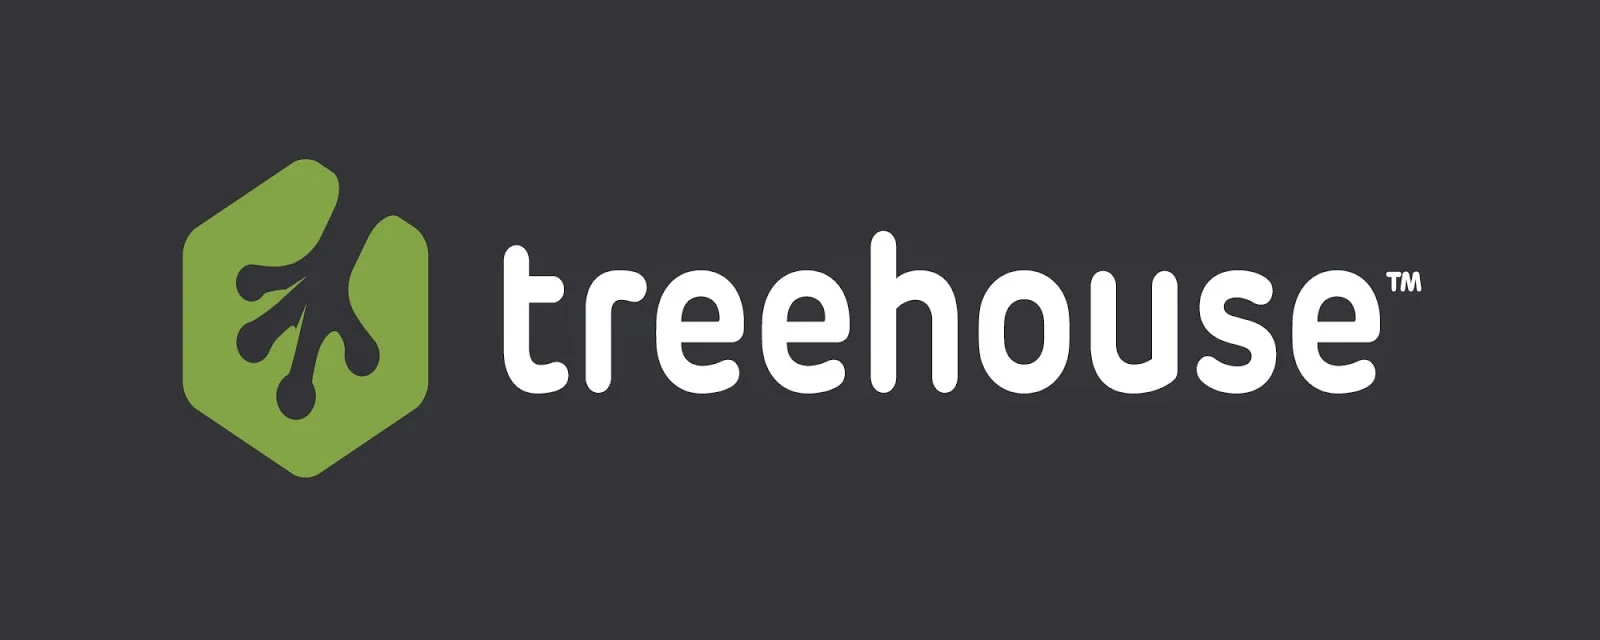 Treehouse - 5 Website yang Nyaman untuk Belajar Bahasa Pemrograman/Koding (HTML, CSS, Java, Ruby, dll)